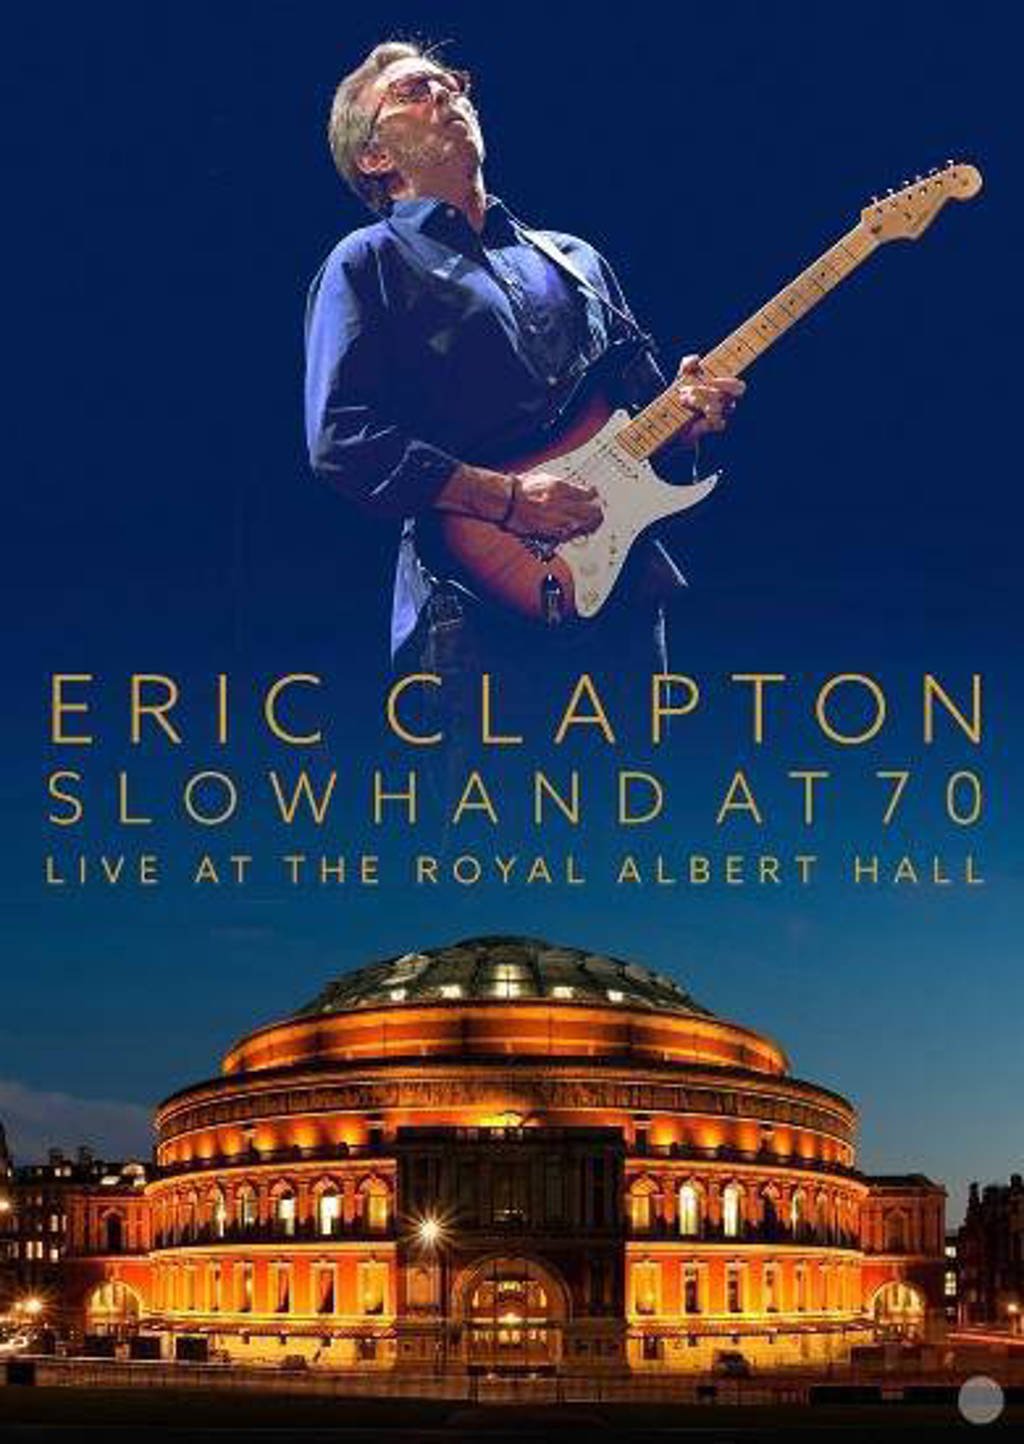 Eric Clapton - Slowhand at 70: Live At The Royal Albert Hall (DVD)